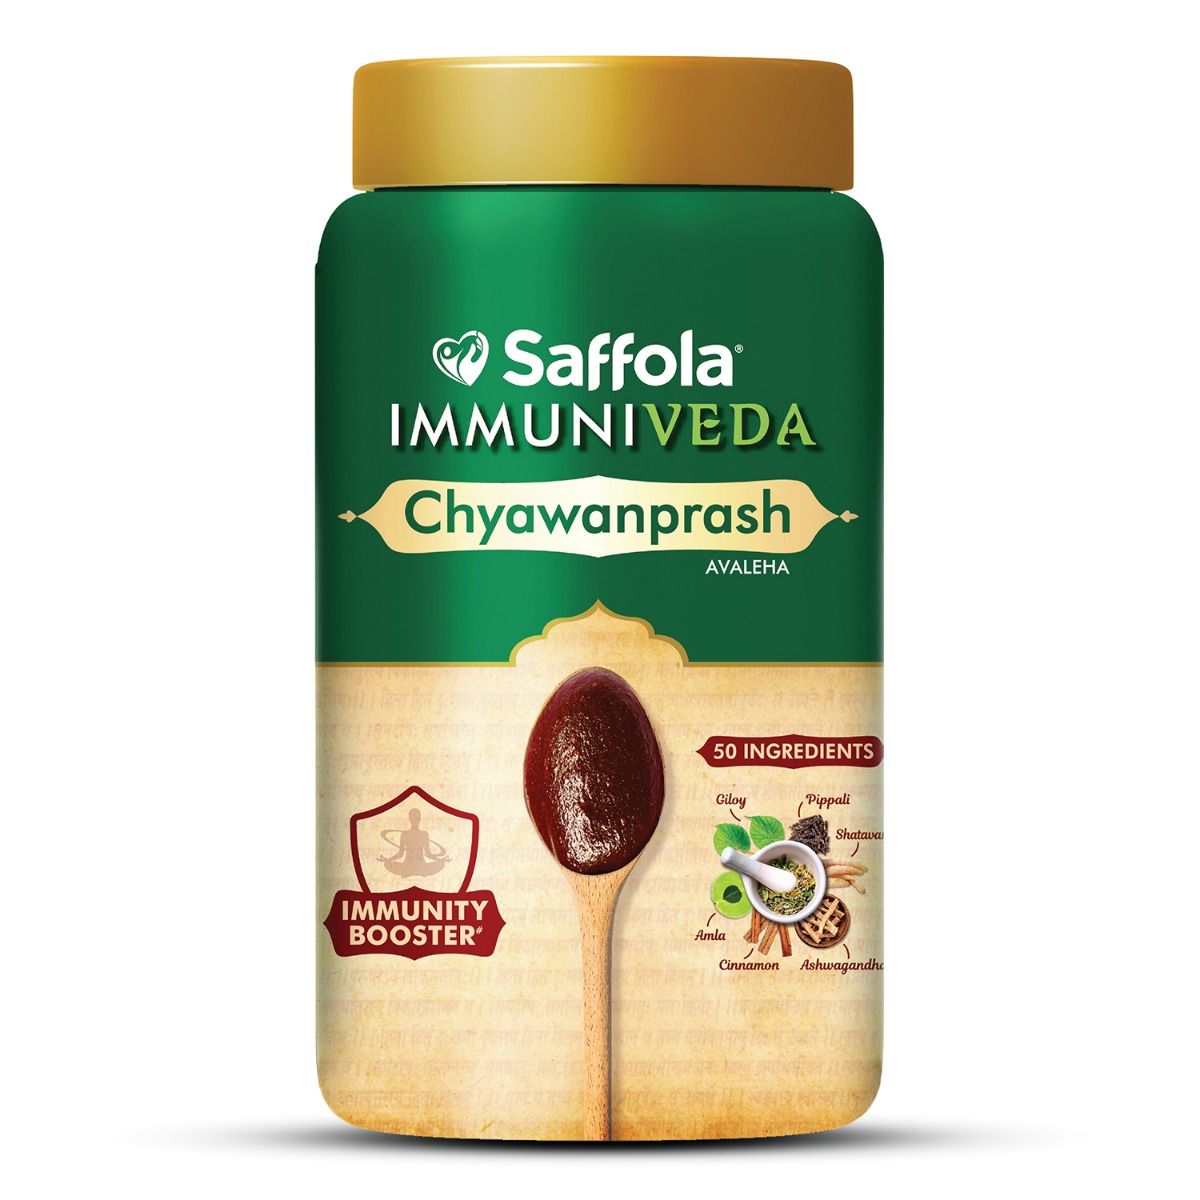 Saffola Immuniveda Chyawanprash, 1.25 kg, Pack of 1 